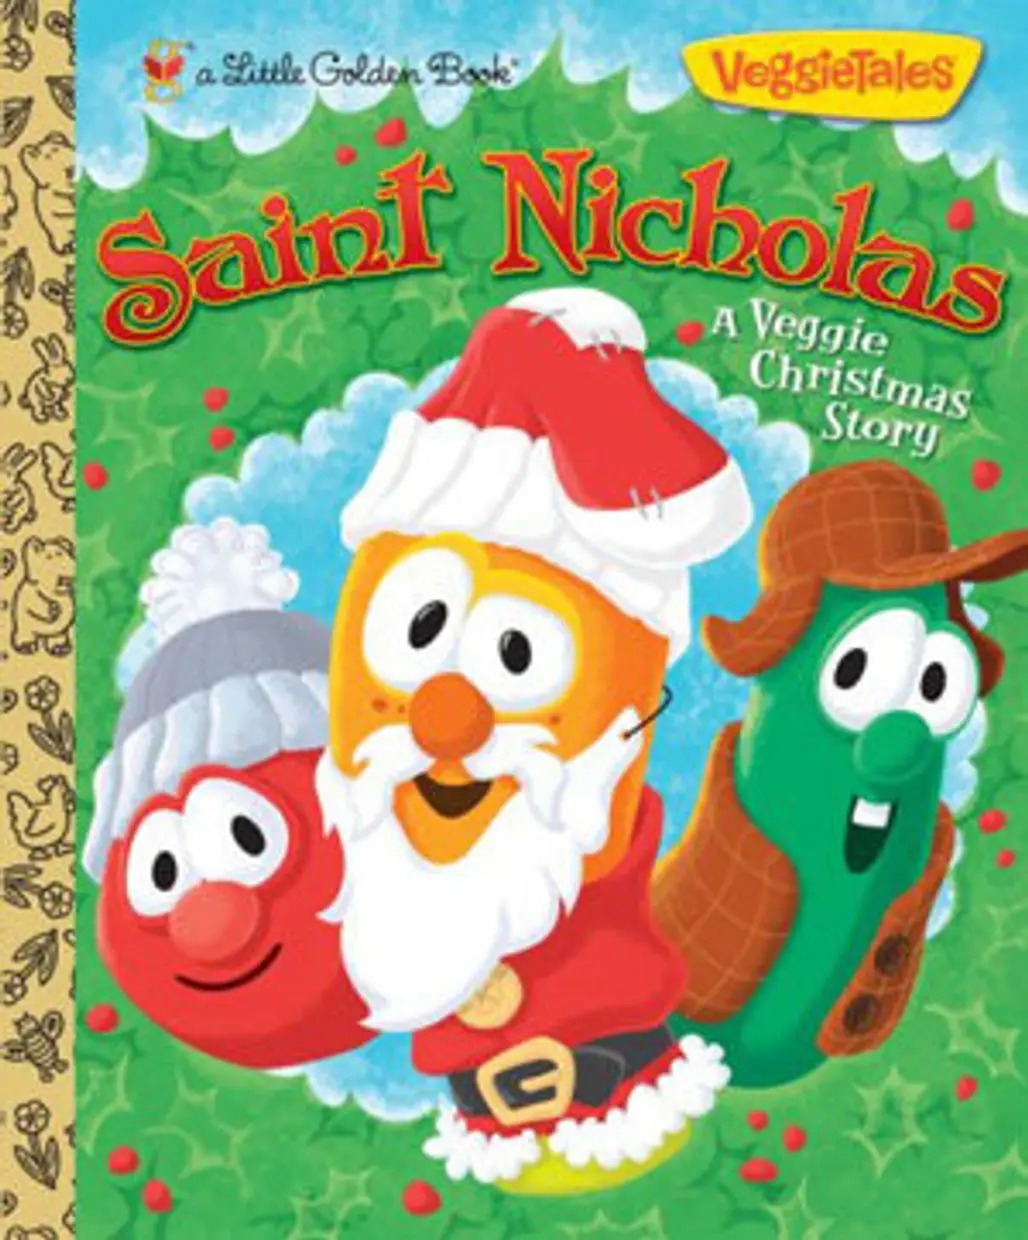 “Saint Nicholas: a Veggie Christmas Story” by Karen Toth